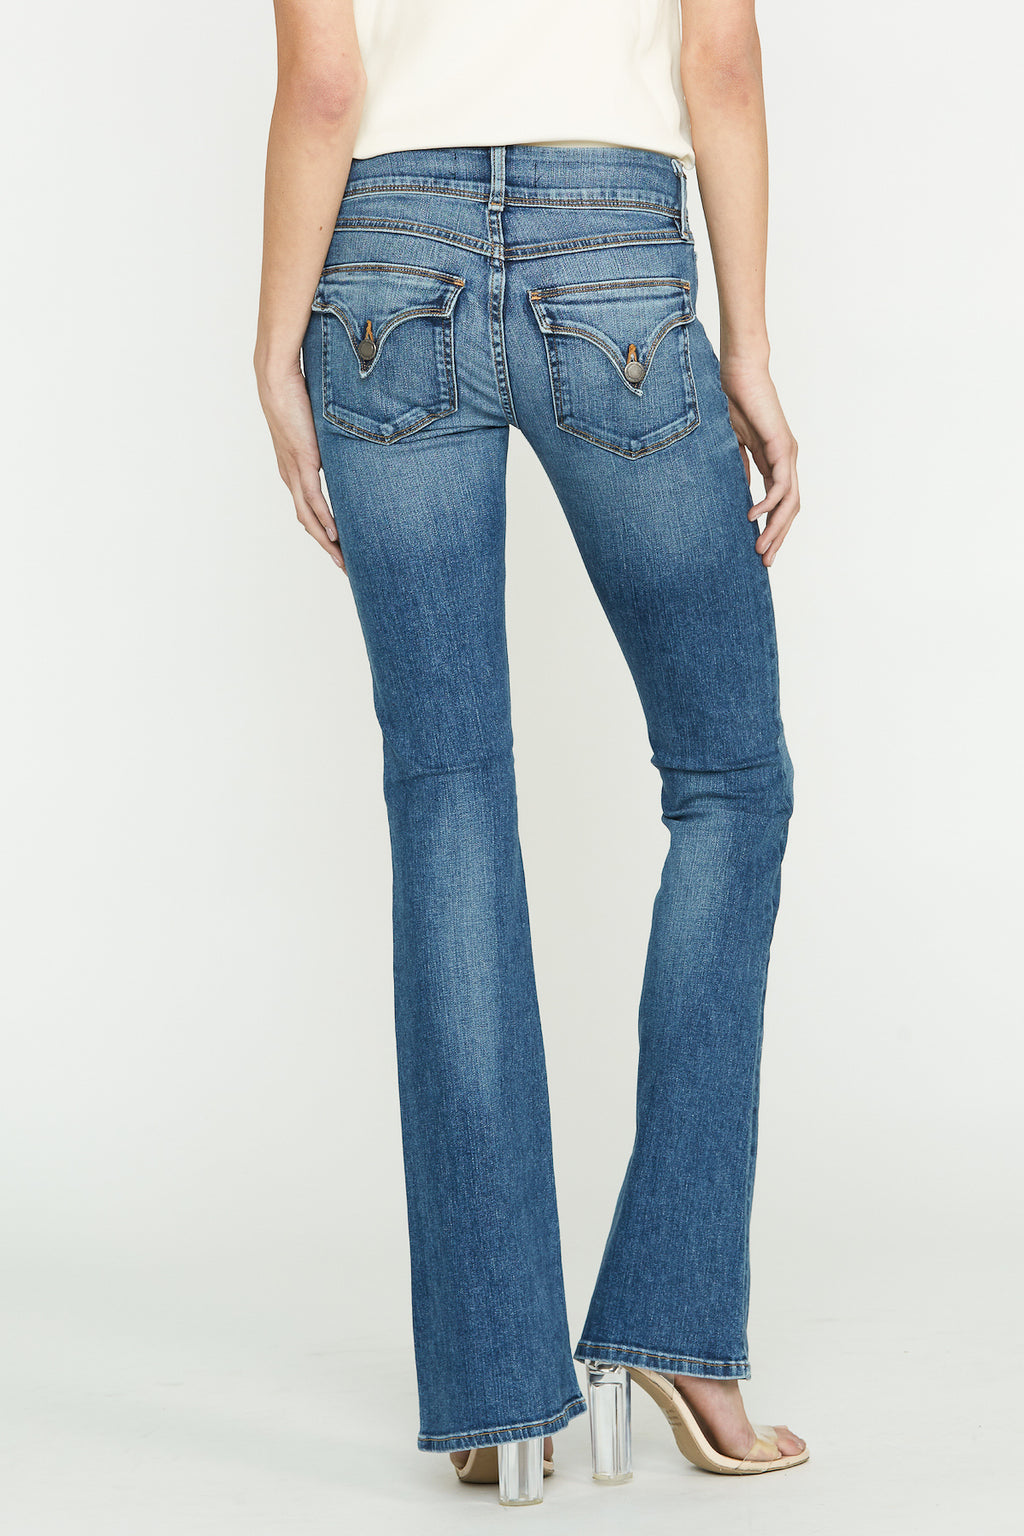 hudson signature bootcut jeans